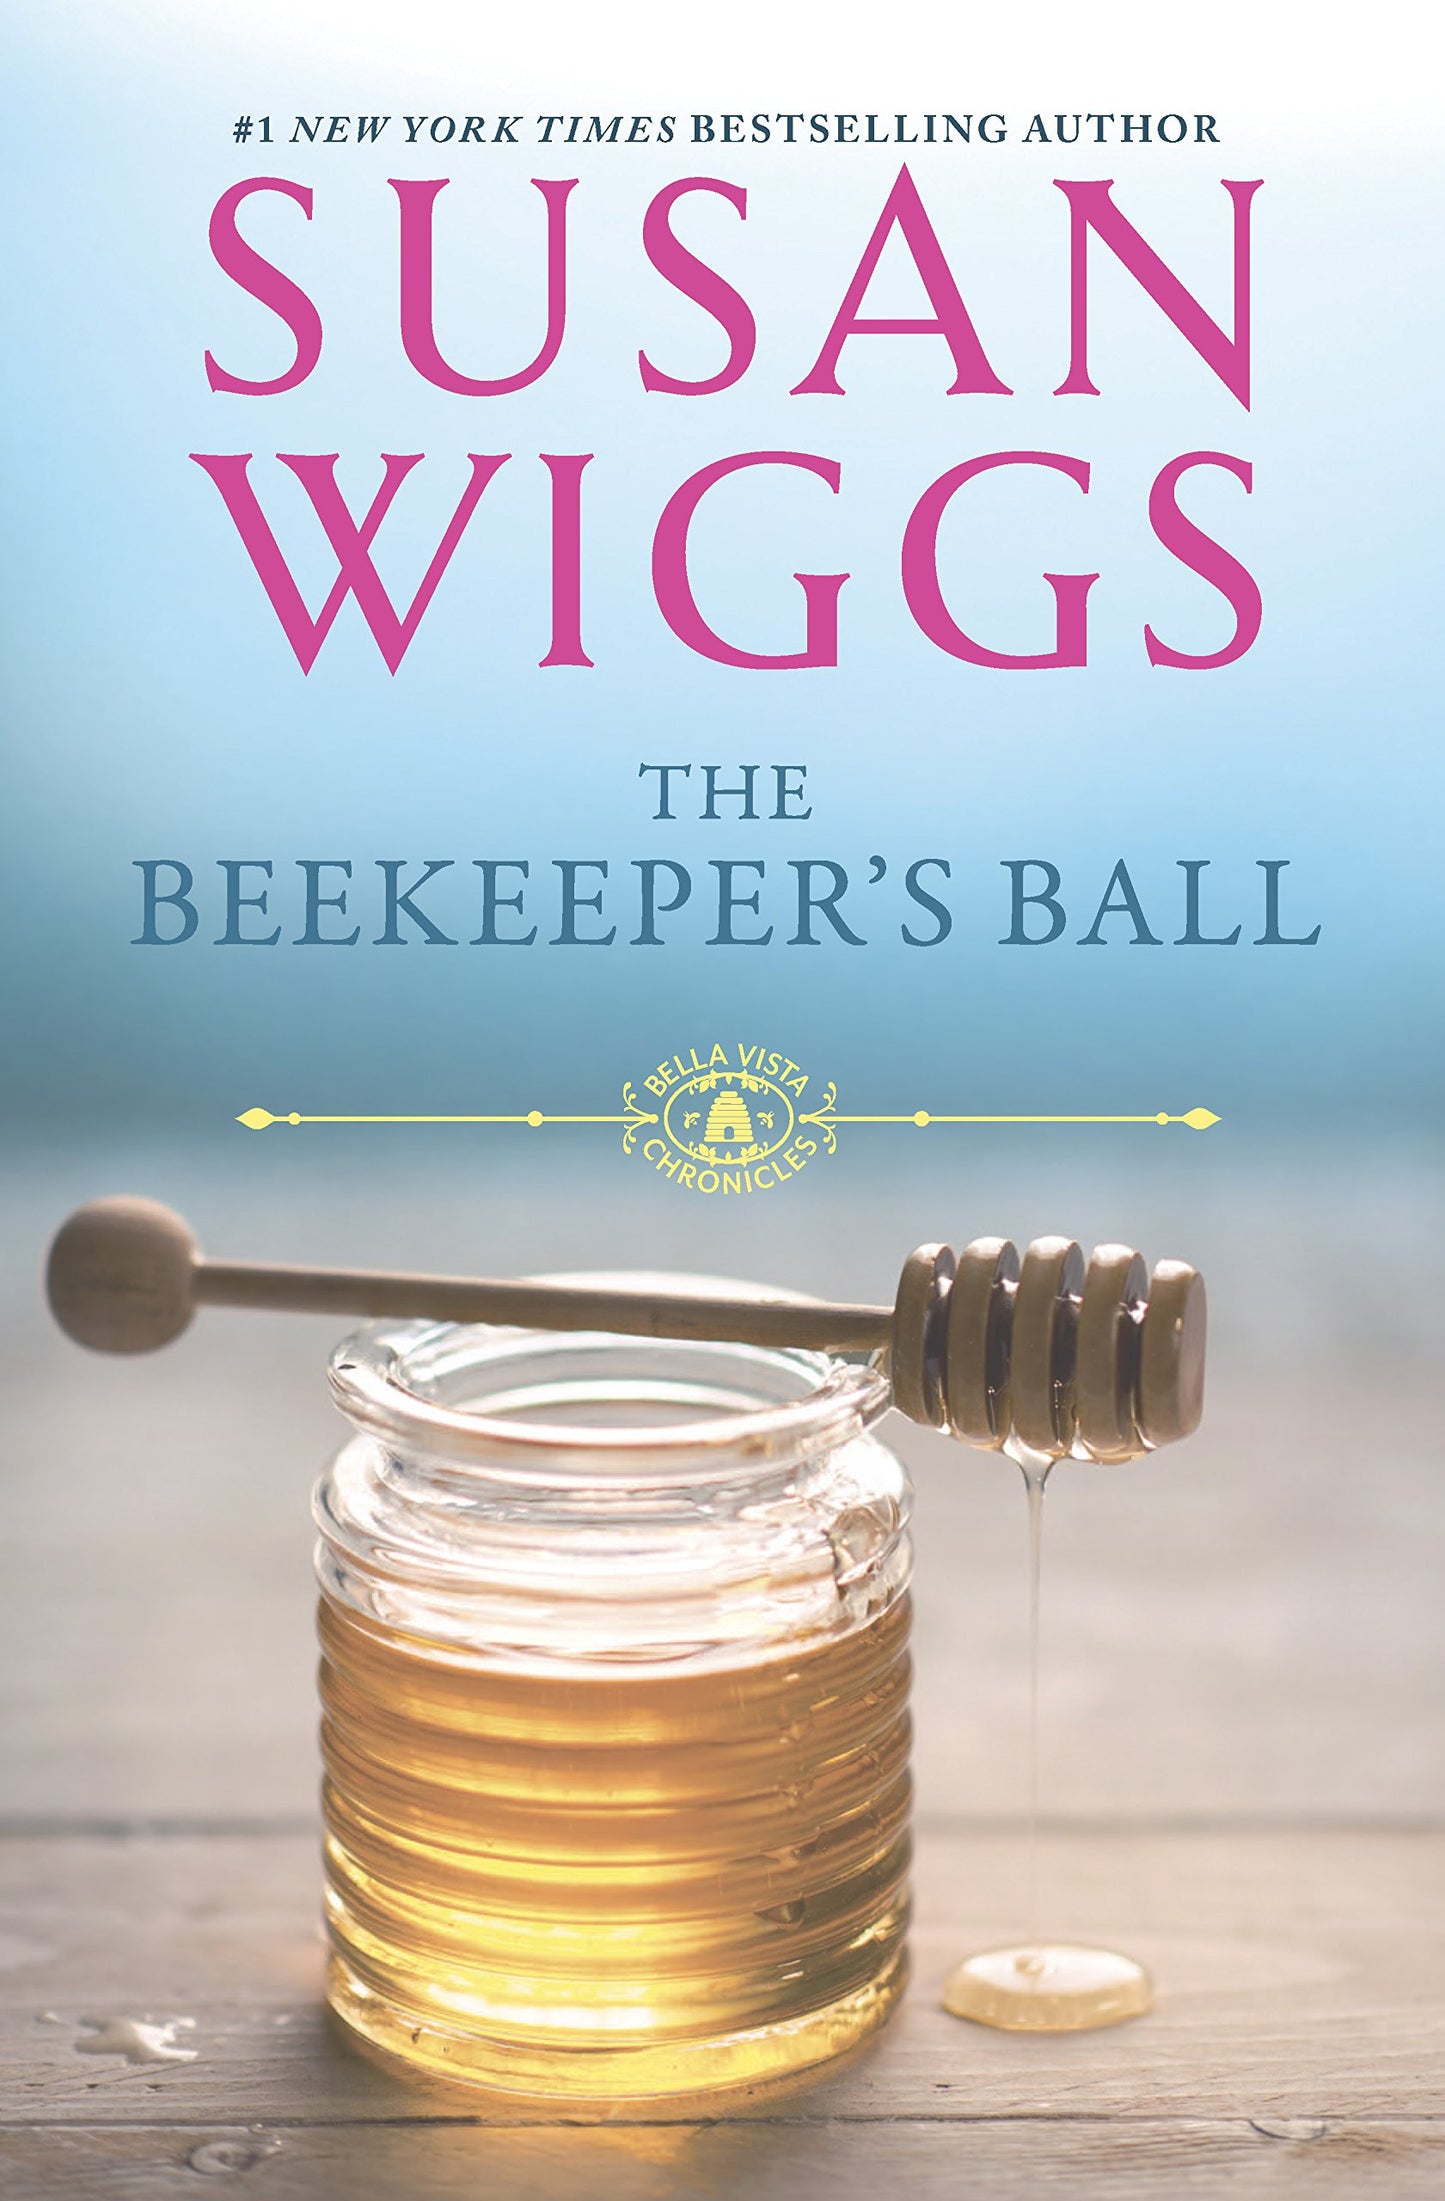 The Beekeeper's Ball ***